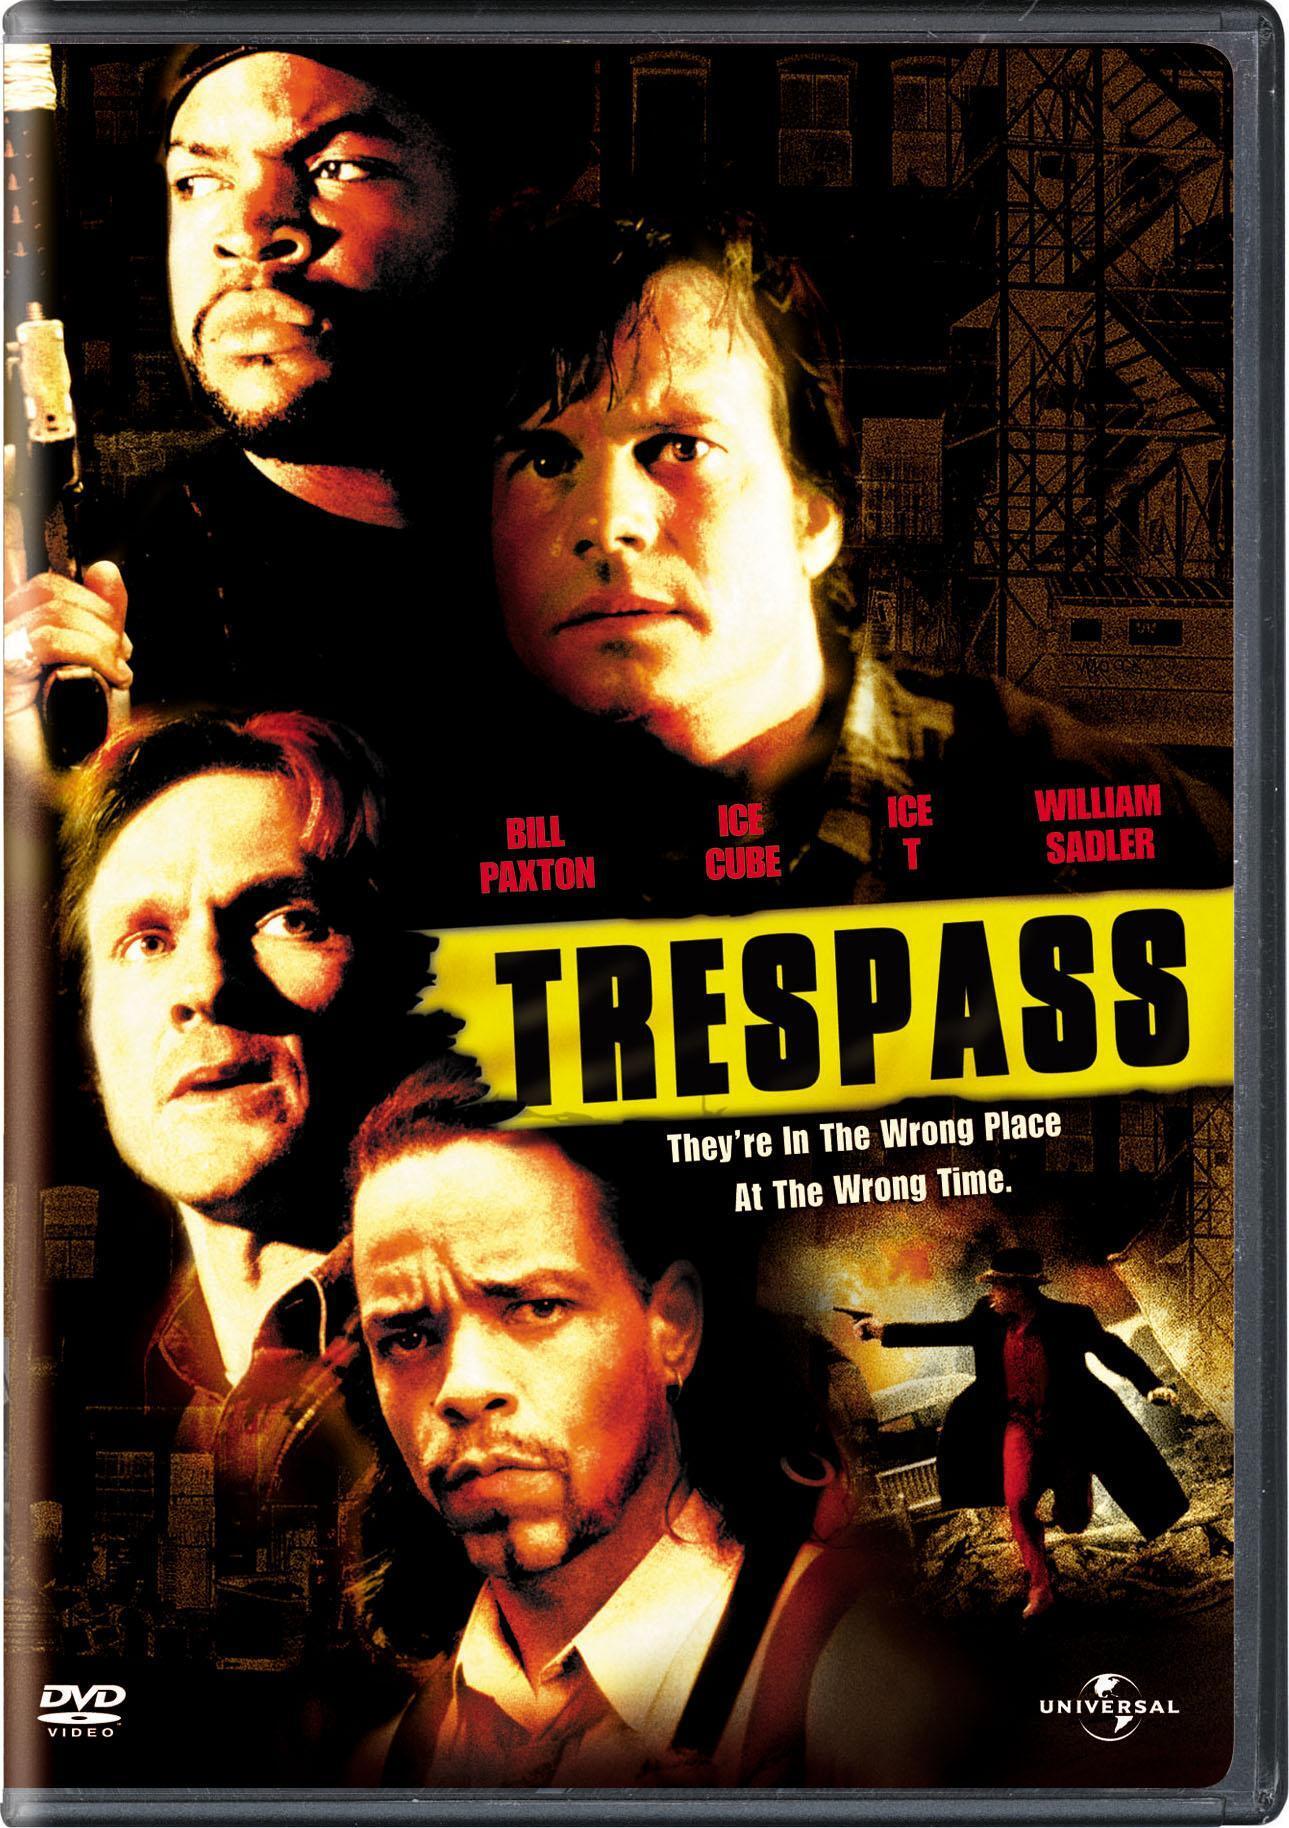 Trespass - DVD [ 1992 ]  - Action Movies On DVD - Movies On GRUV